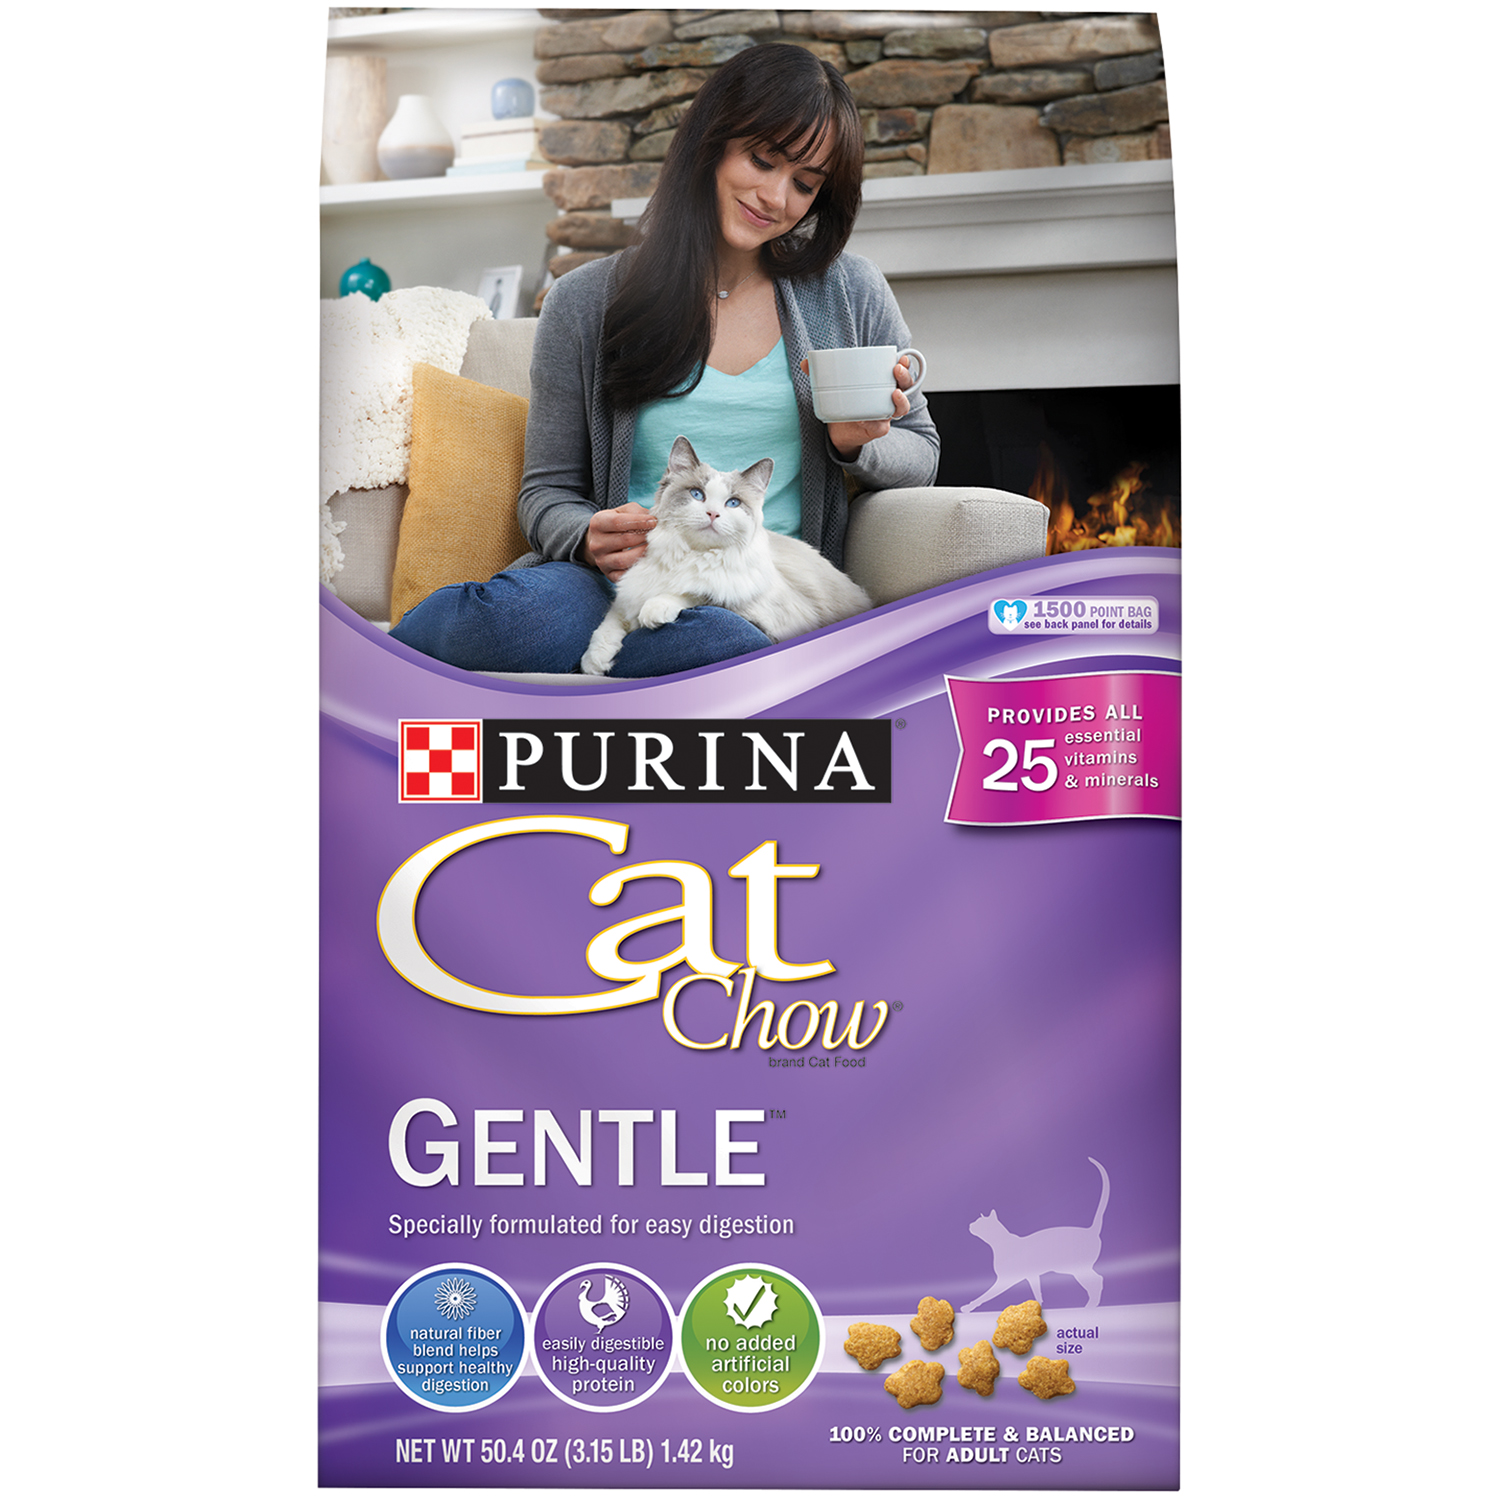 Purina Cat Chow Gentle Cat Food 3.15 lb. Bag Pet Supplies Cat